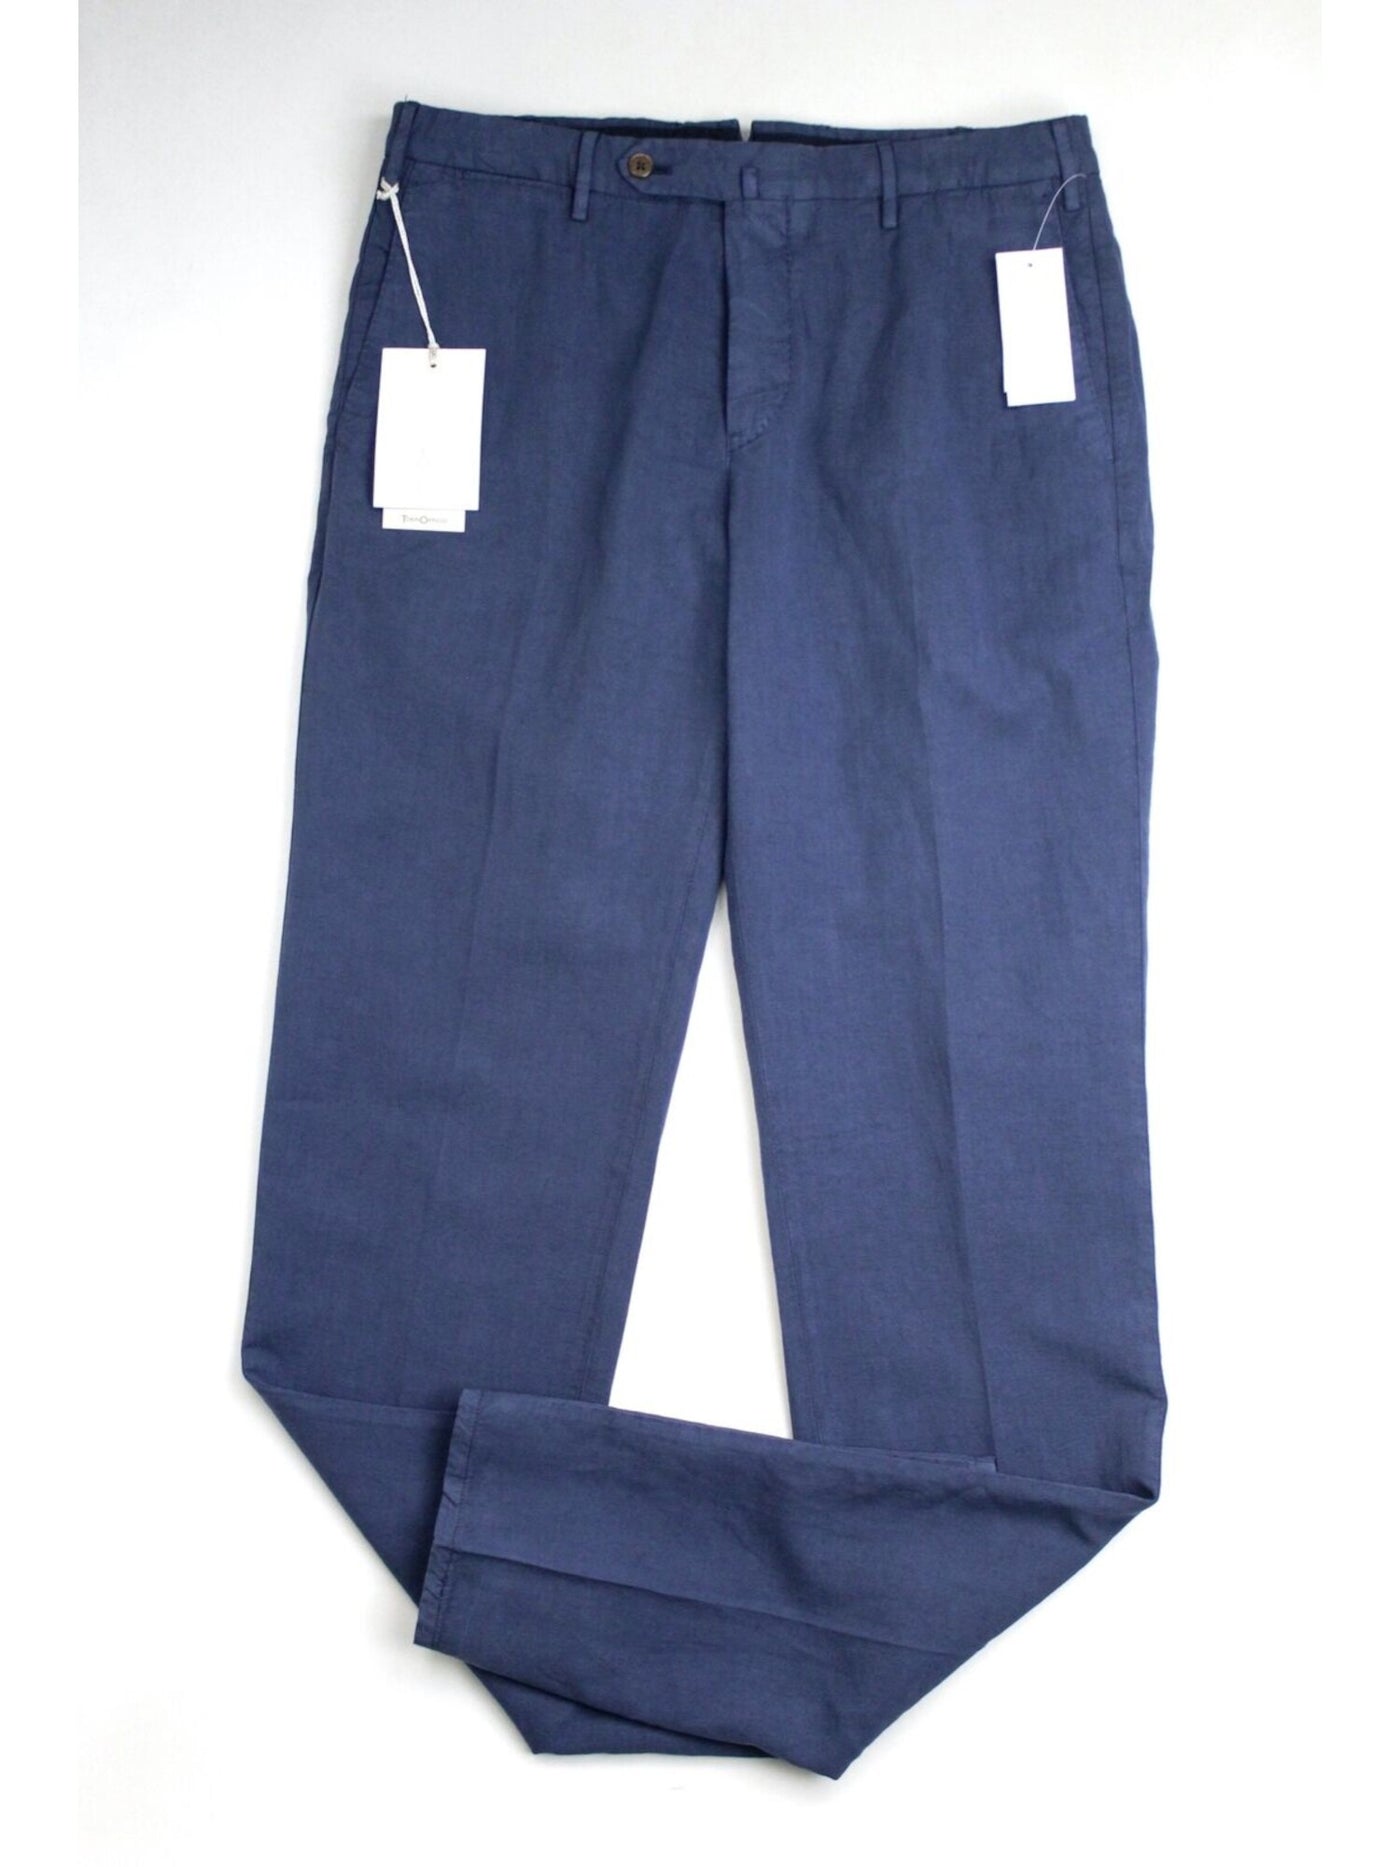 TORIN OPIFICIO Mens Blue Straight Leg, Classic Fit Cashmere Pants 54